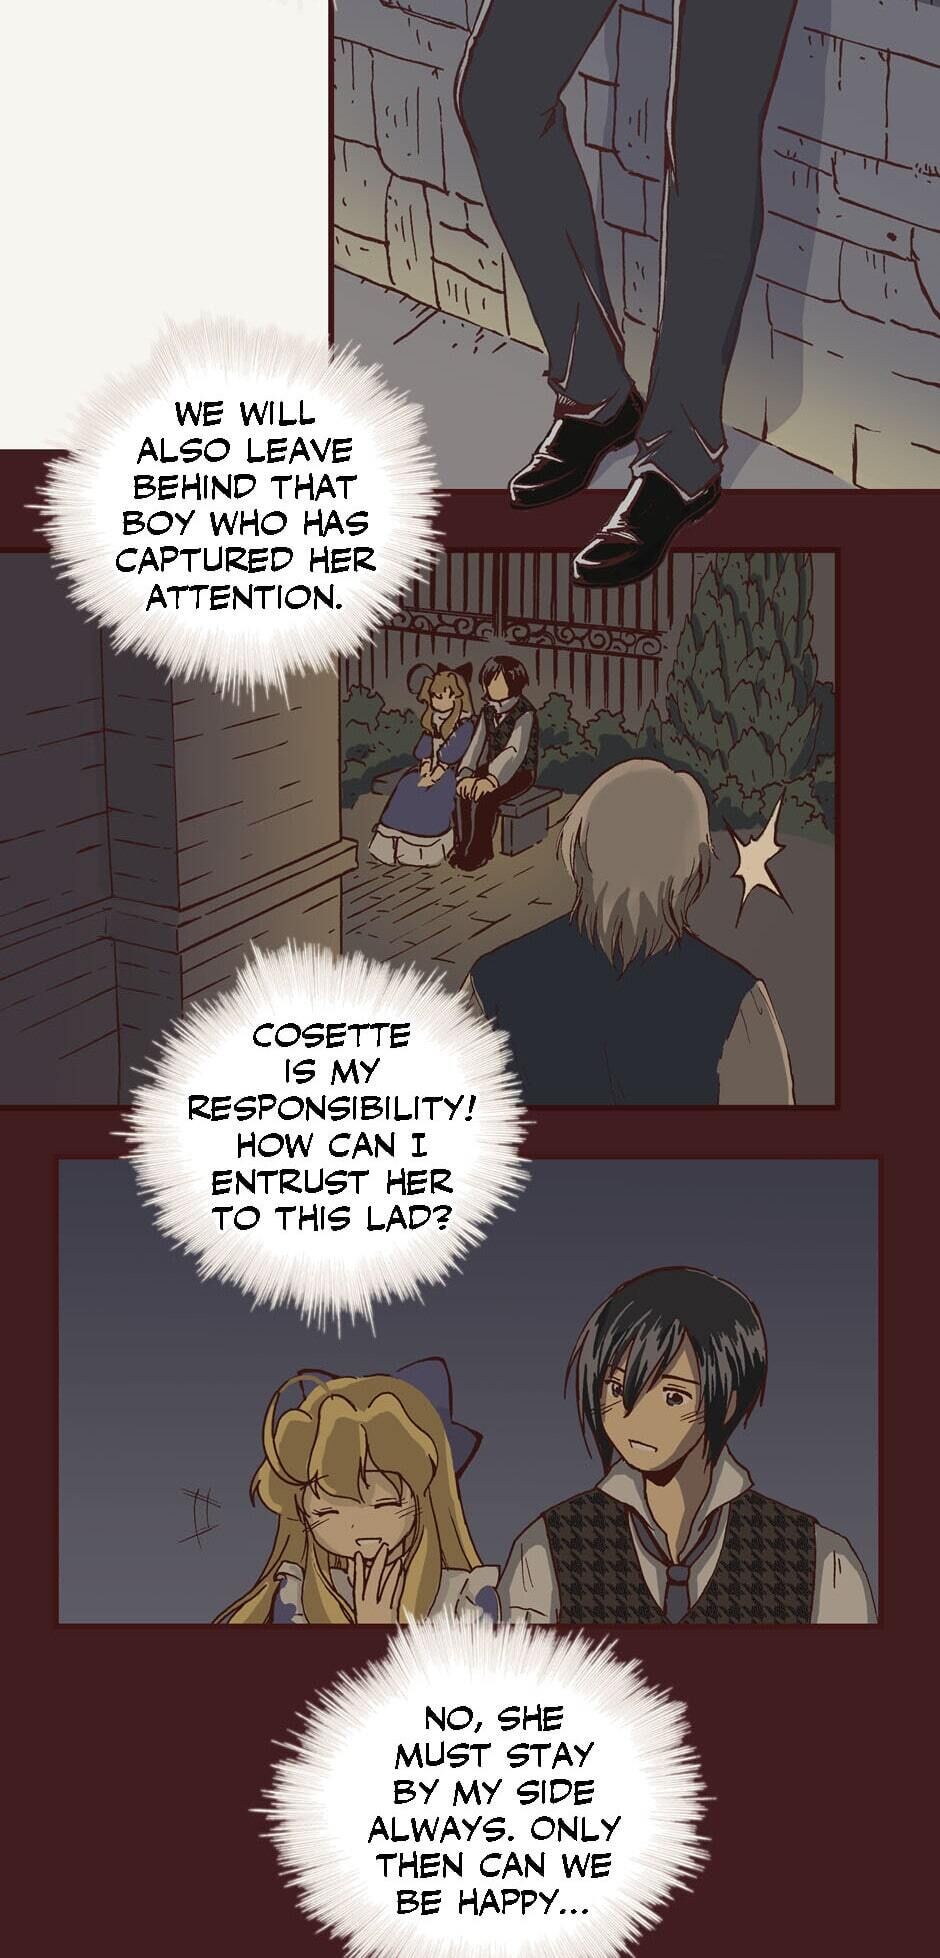 Les Miserables (Arai Takahiro) - Page 2